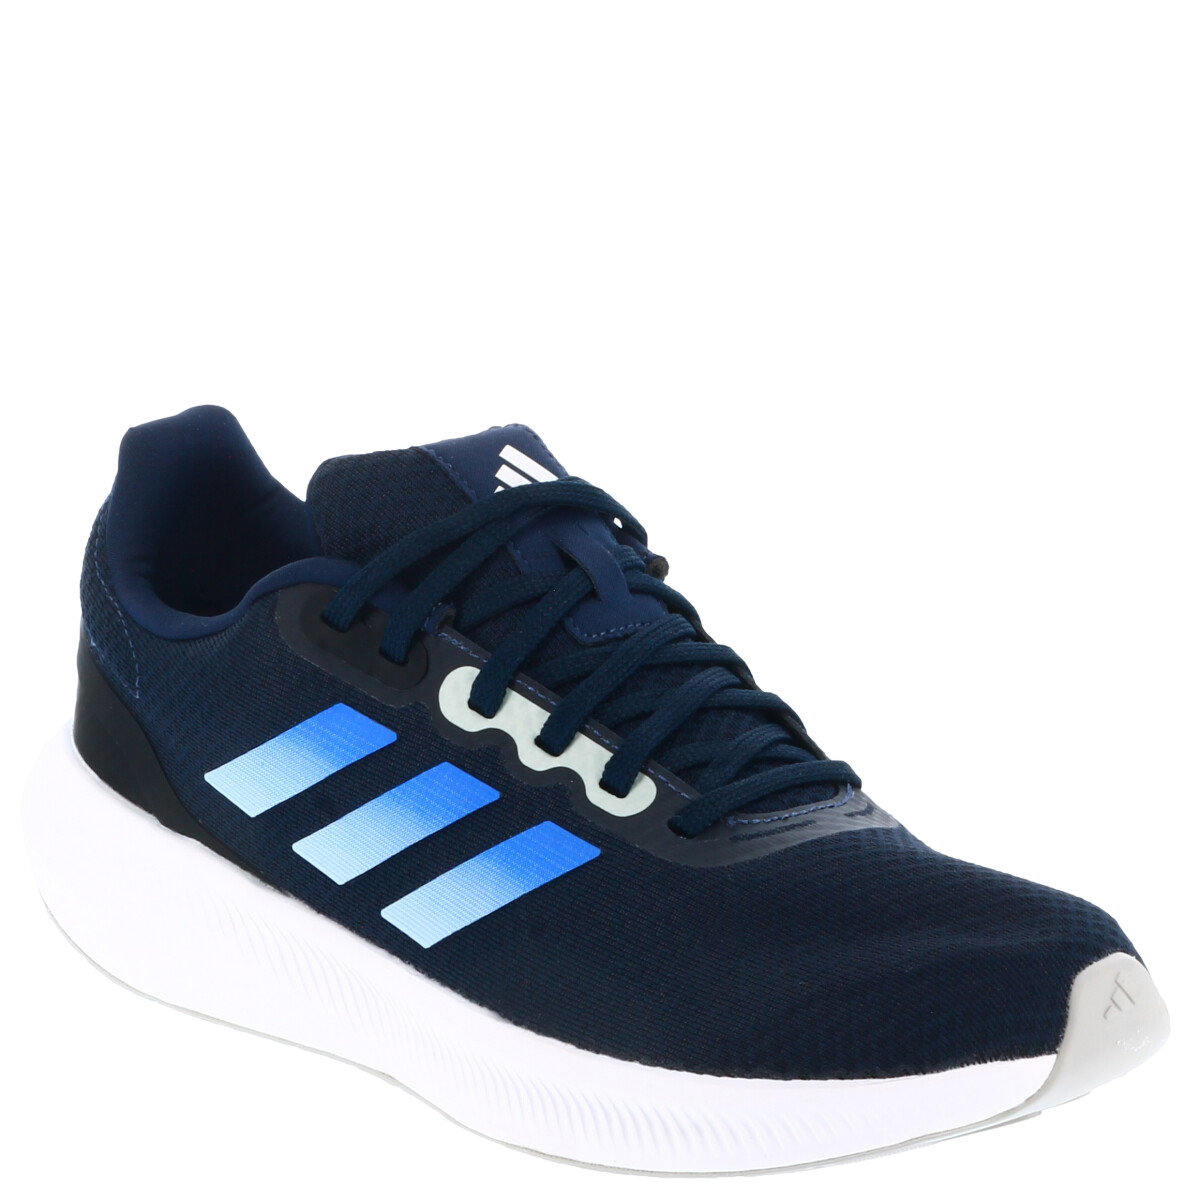 Runfalcon 3.0 Adidas - Marino/Azul/Blanco 